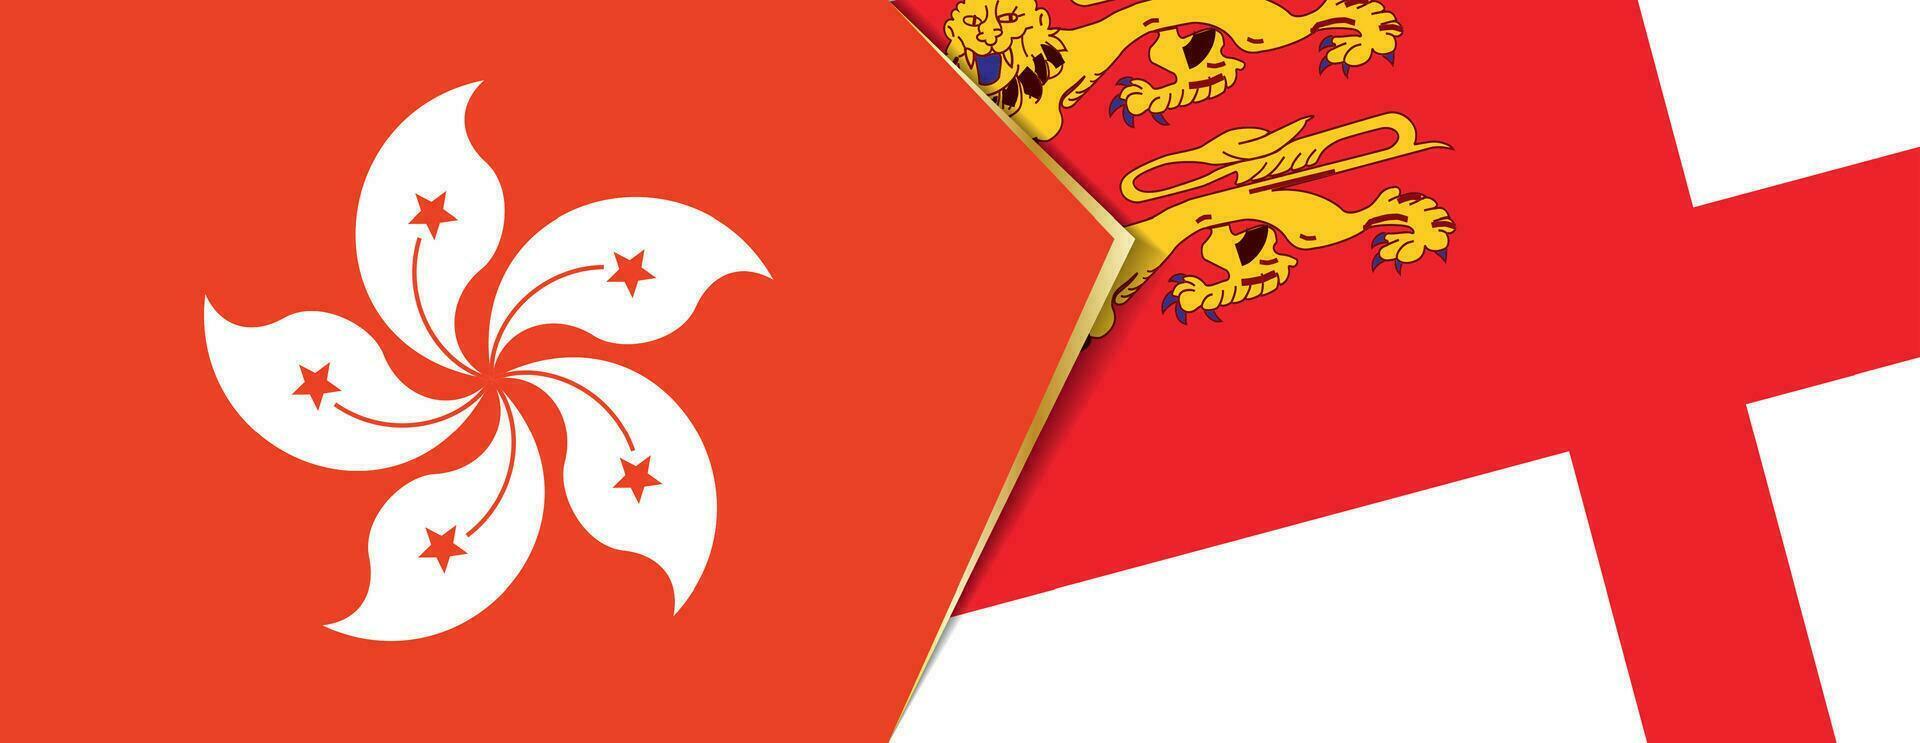 Hong Kong and Sark flags, two vector flags.